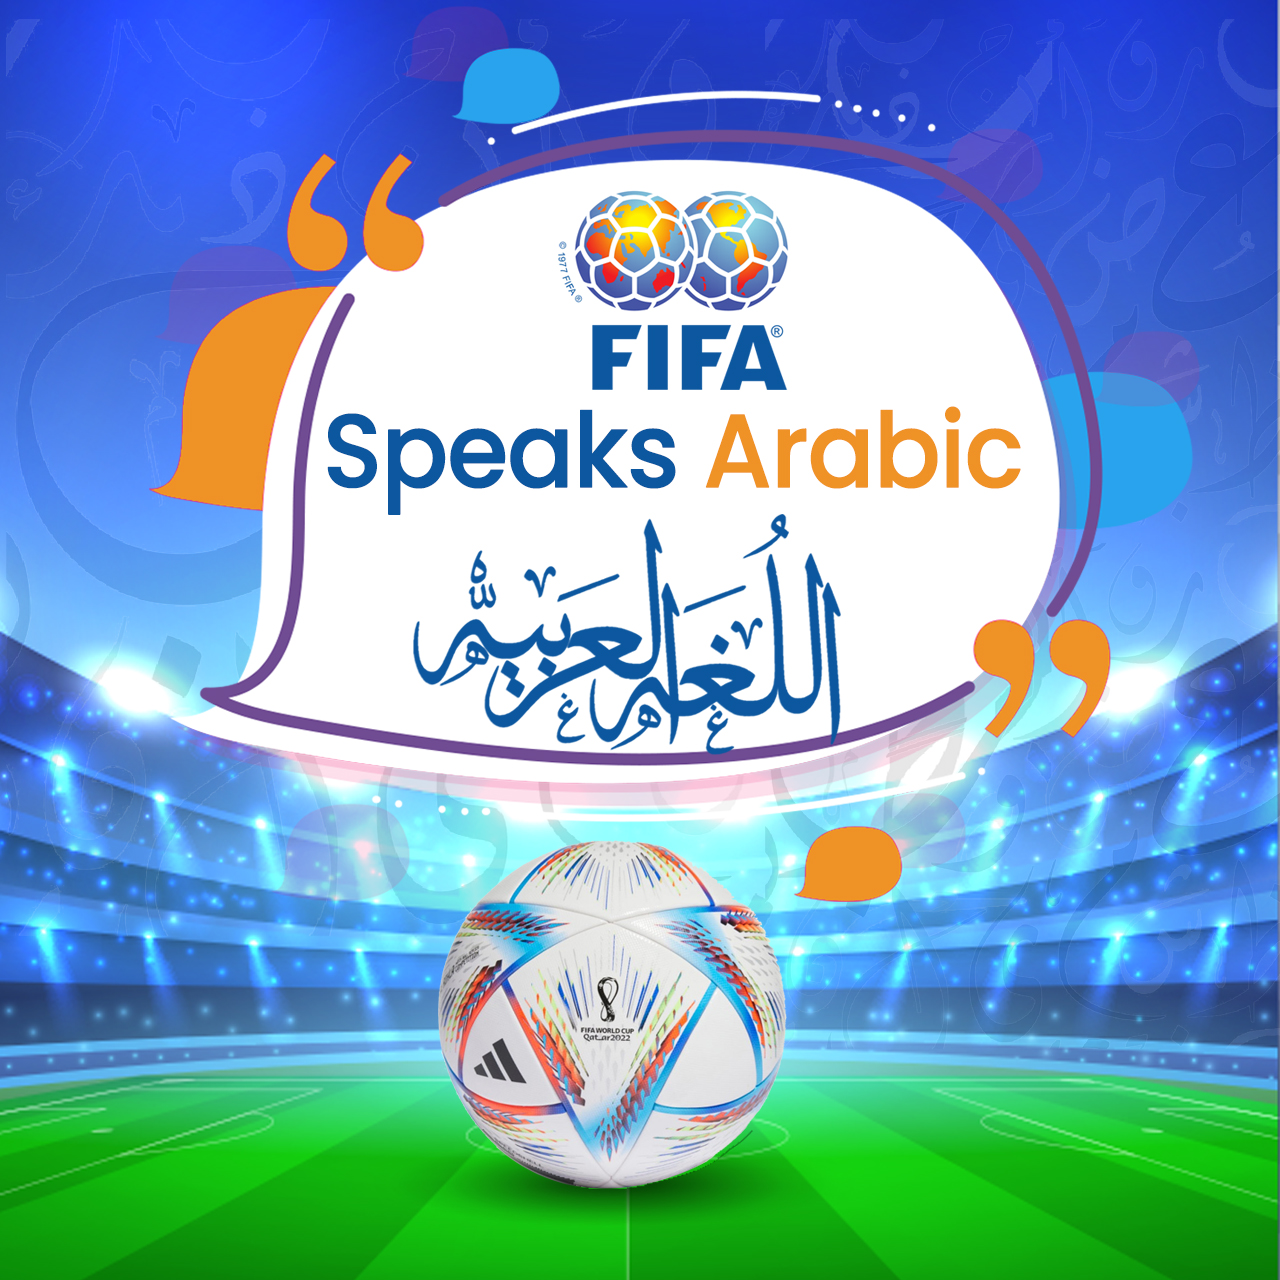 FIFA speaks Arabic 5